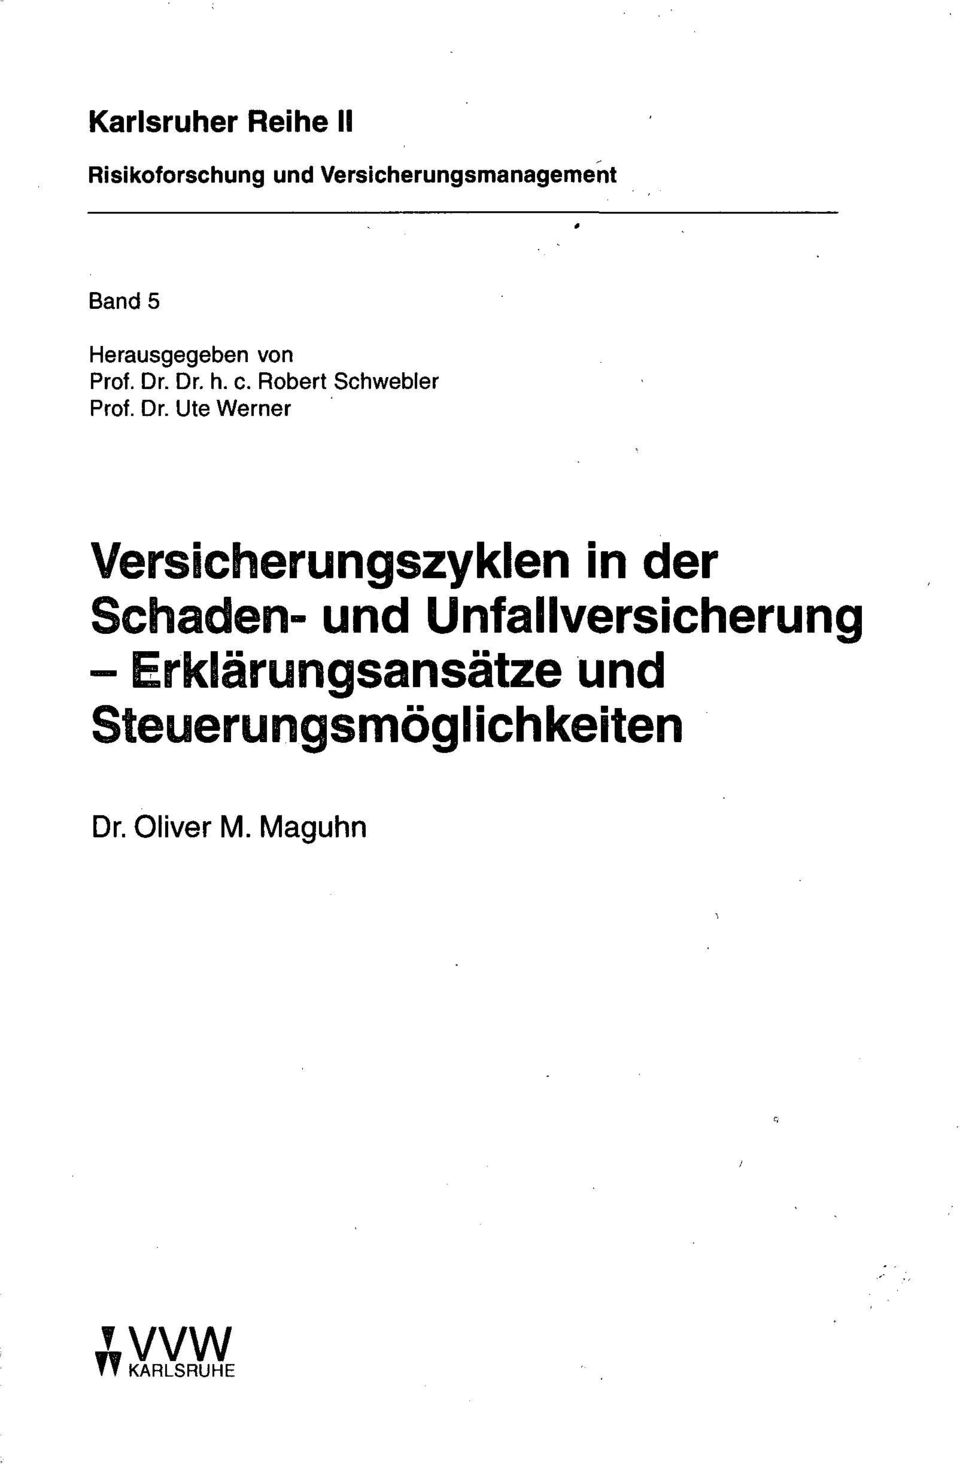 Dr. h. c. Robert Schwebler Prof. Dr.